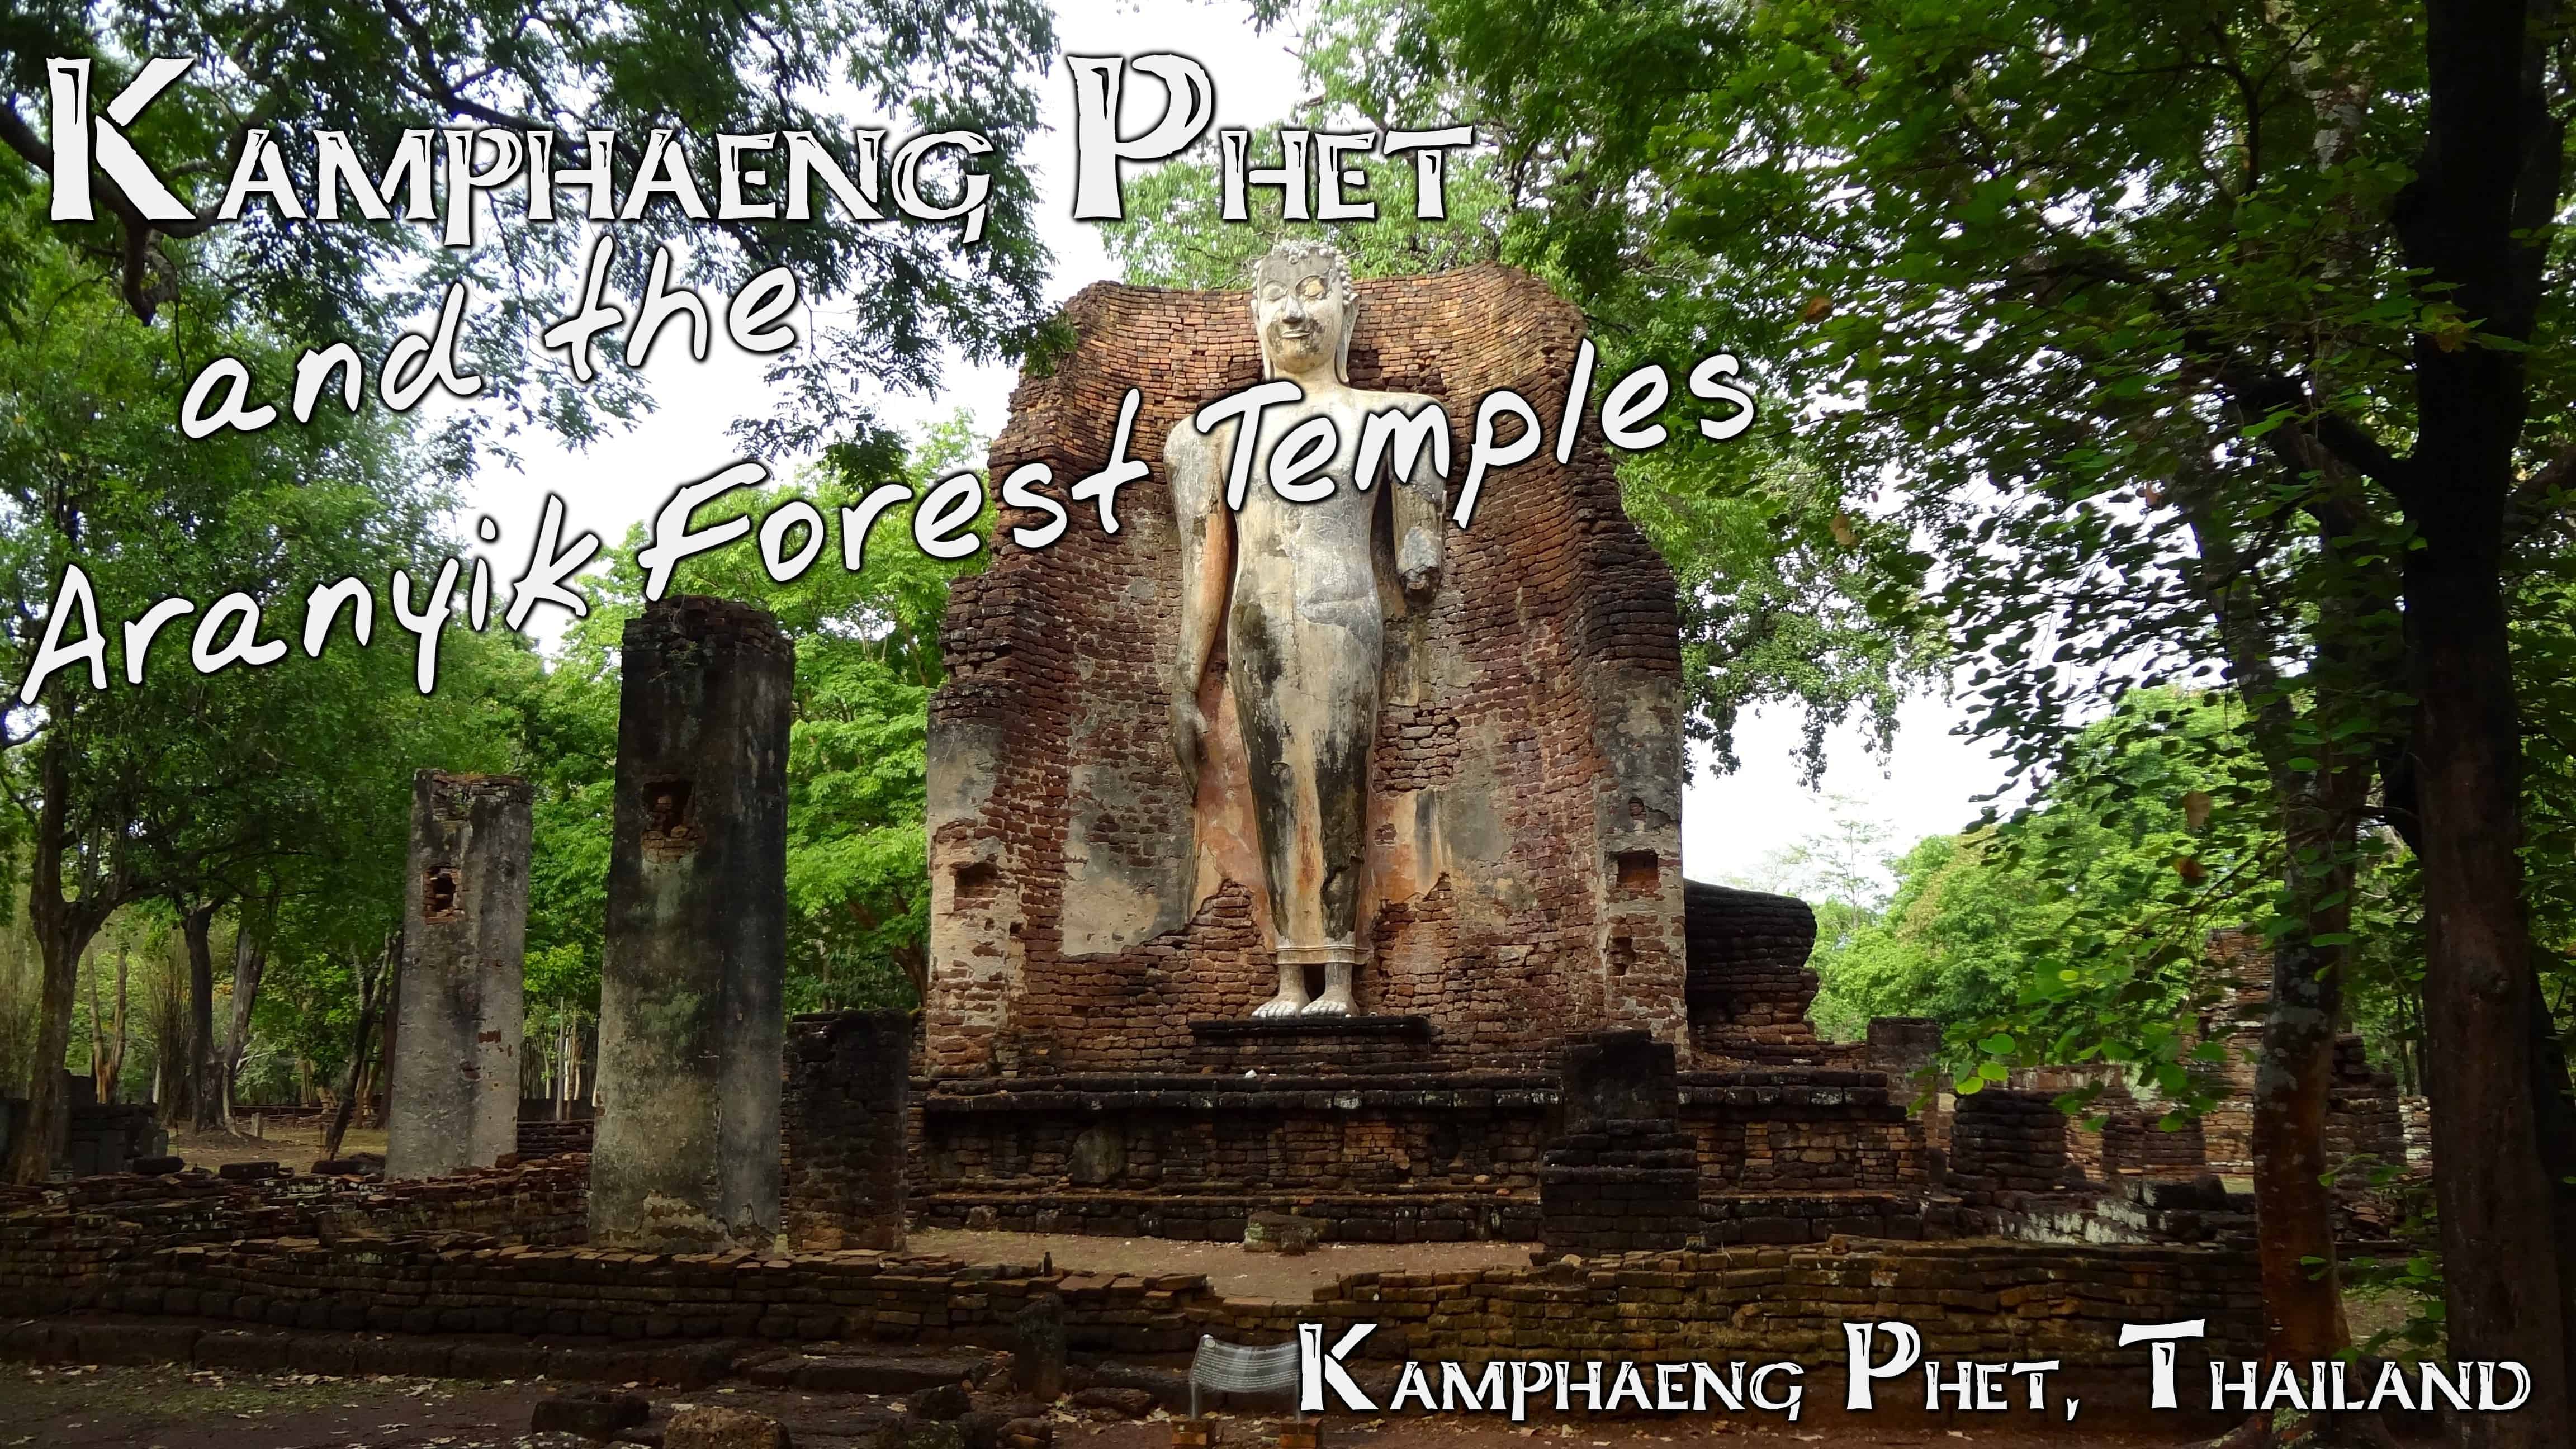 Kamphaeng Phet and the Aranyik Forest Temples